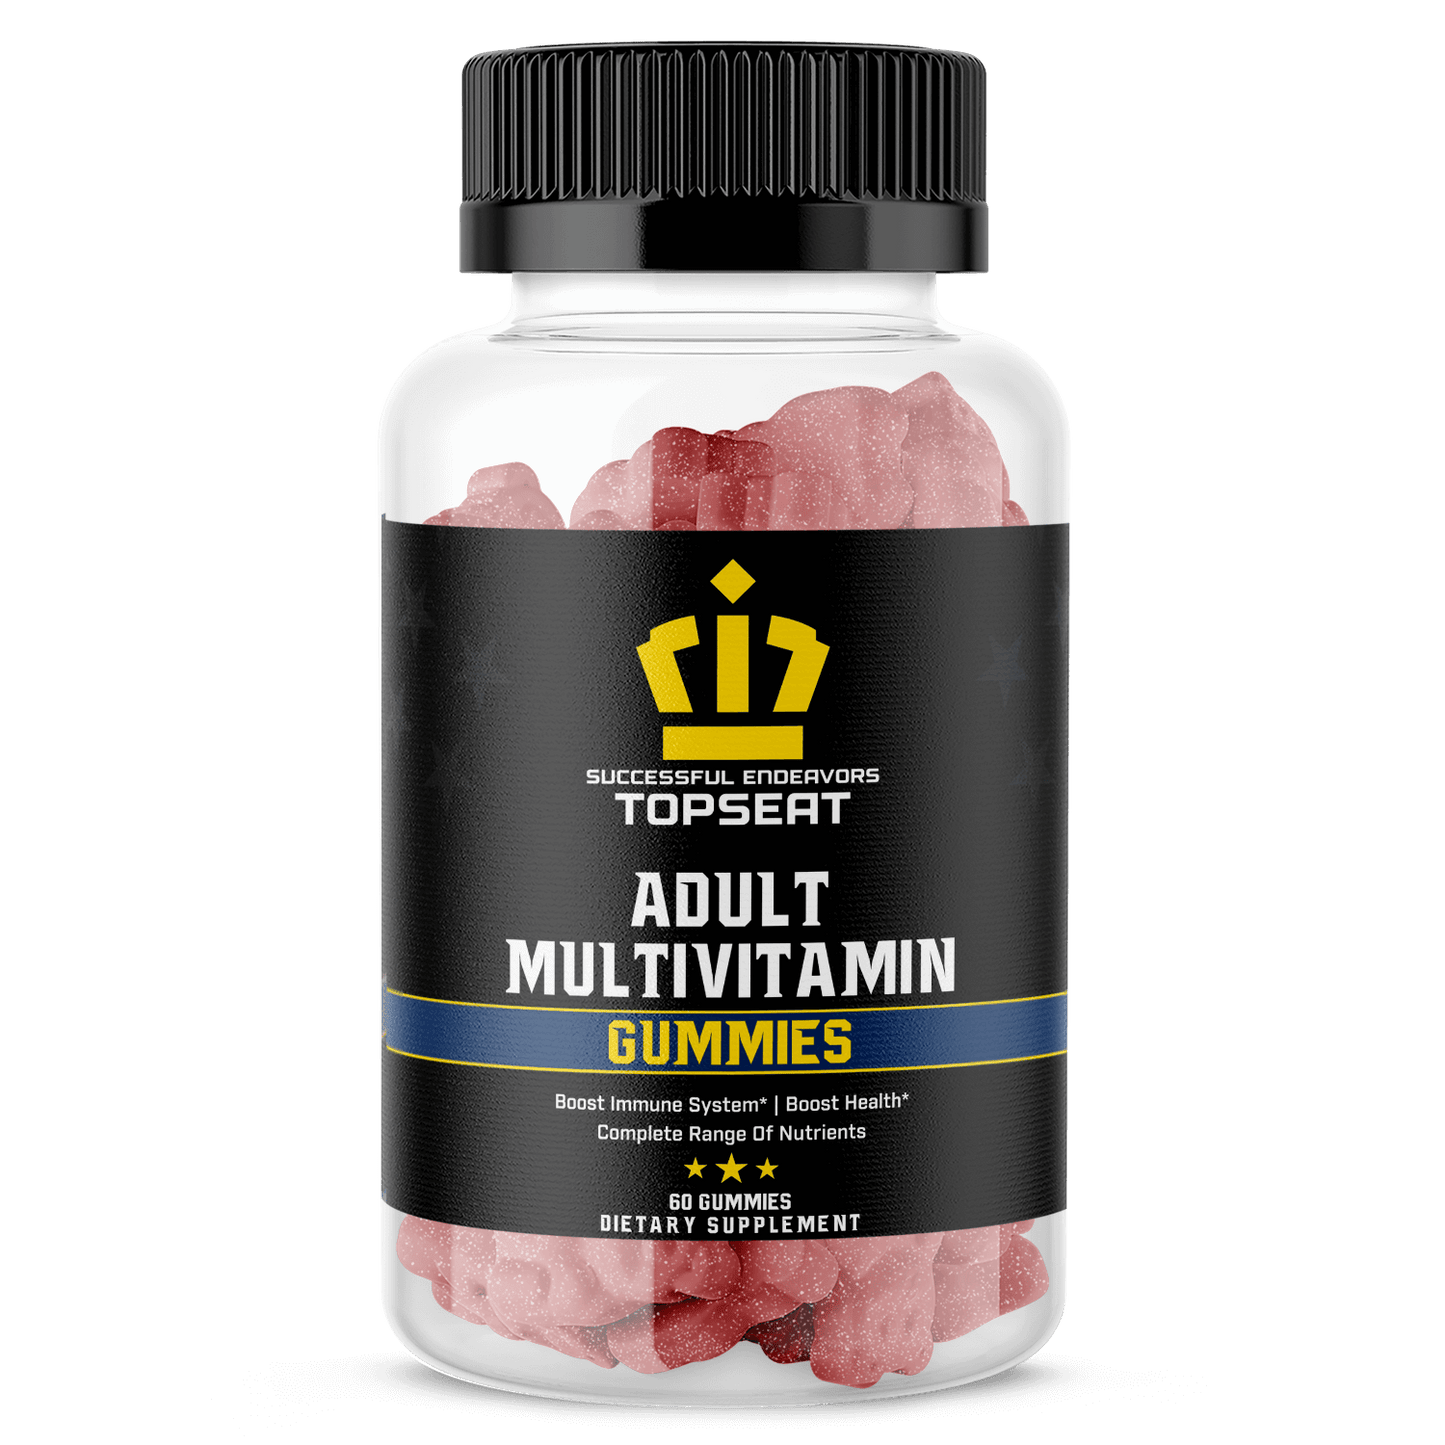 Topseat Adult Multivitamin Gummies